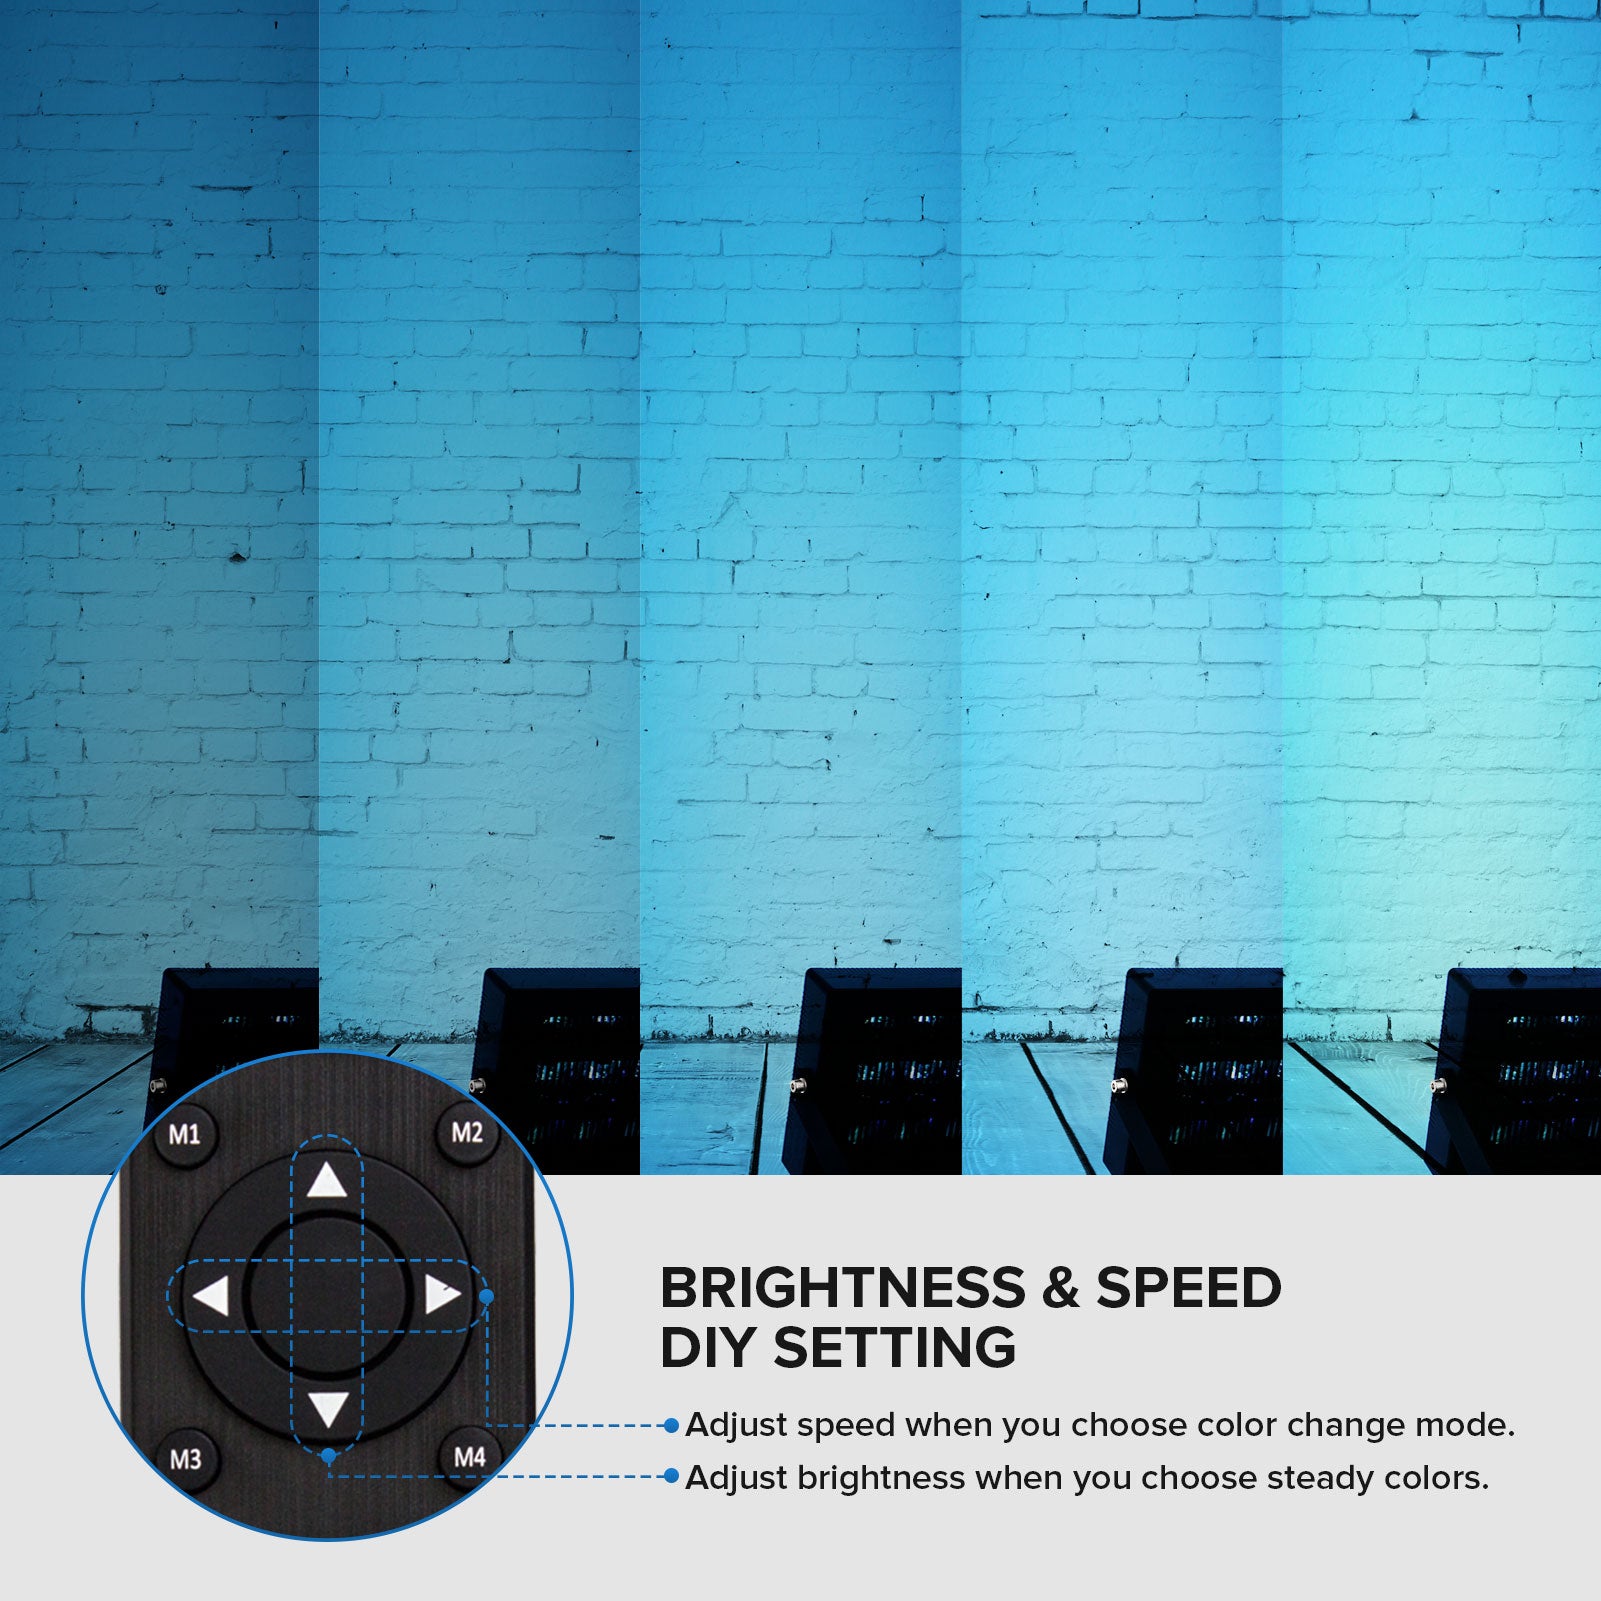 50W RGB LED Flood Light (US, CA ONLY) has brightness & speed DIY setting.